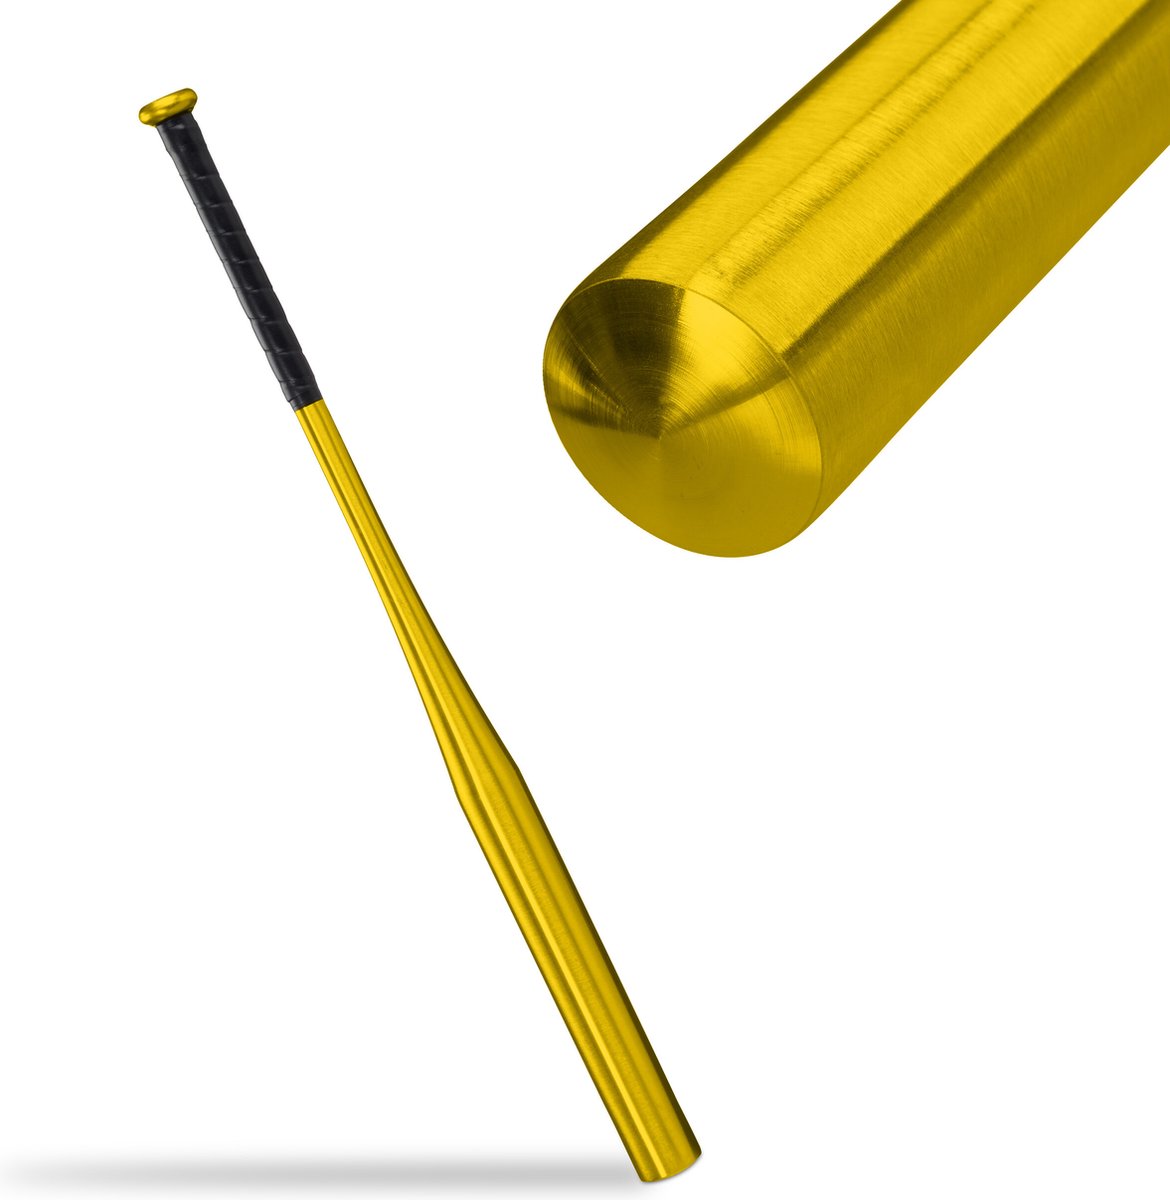 Relaxdays honkbalknuppel aluminium - goud - baseball knuppel 34 inch - baseball bat 86 cm - Relaxdays